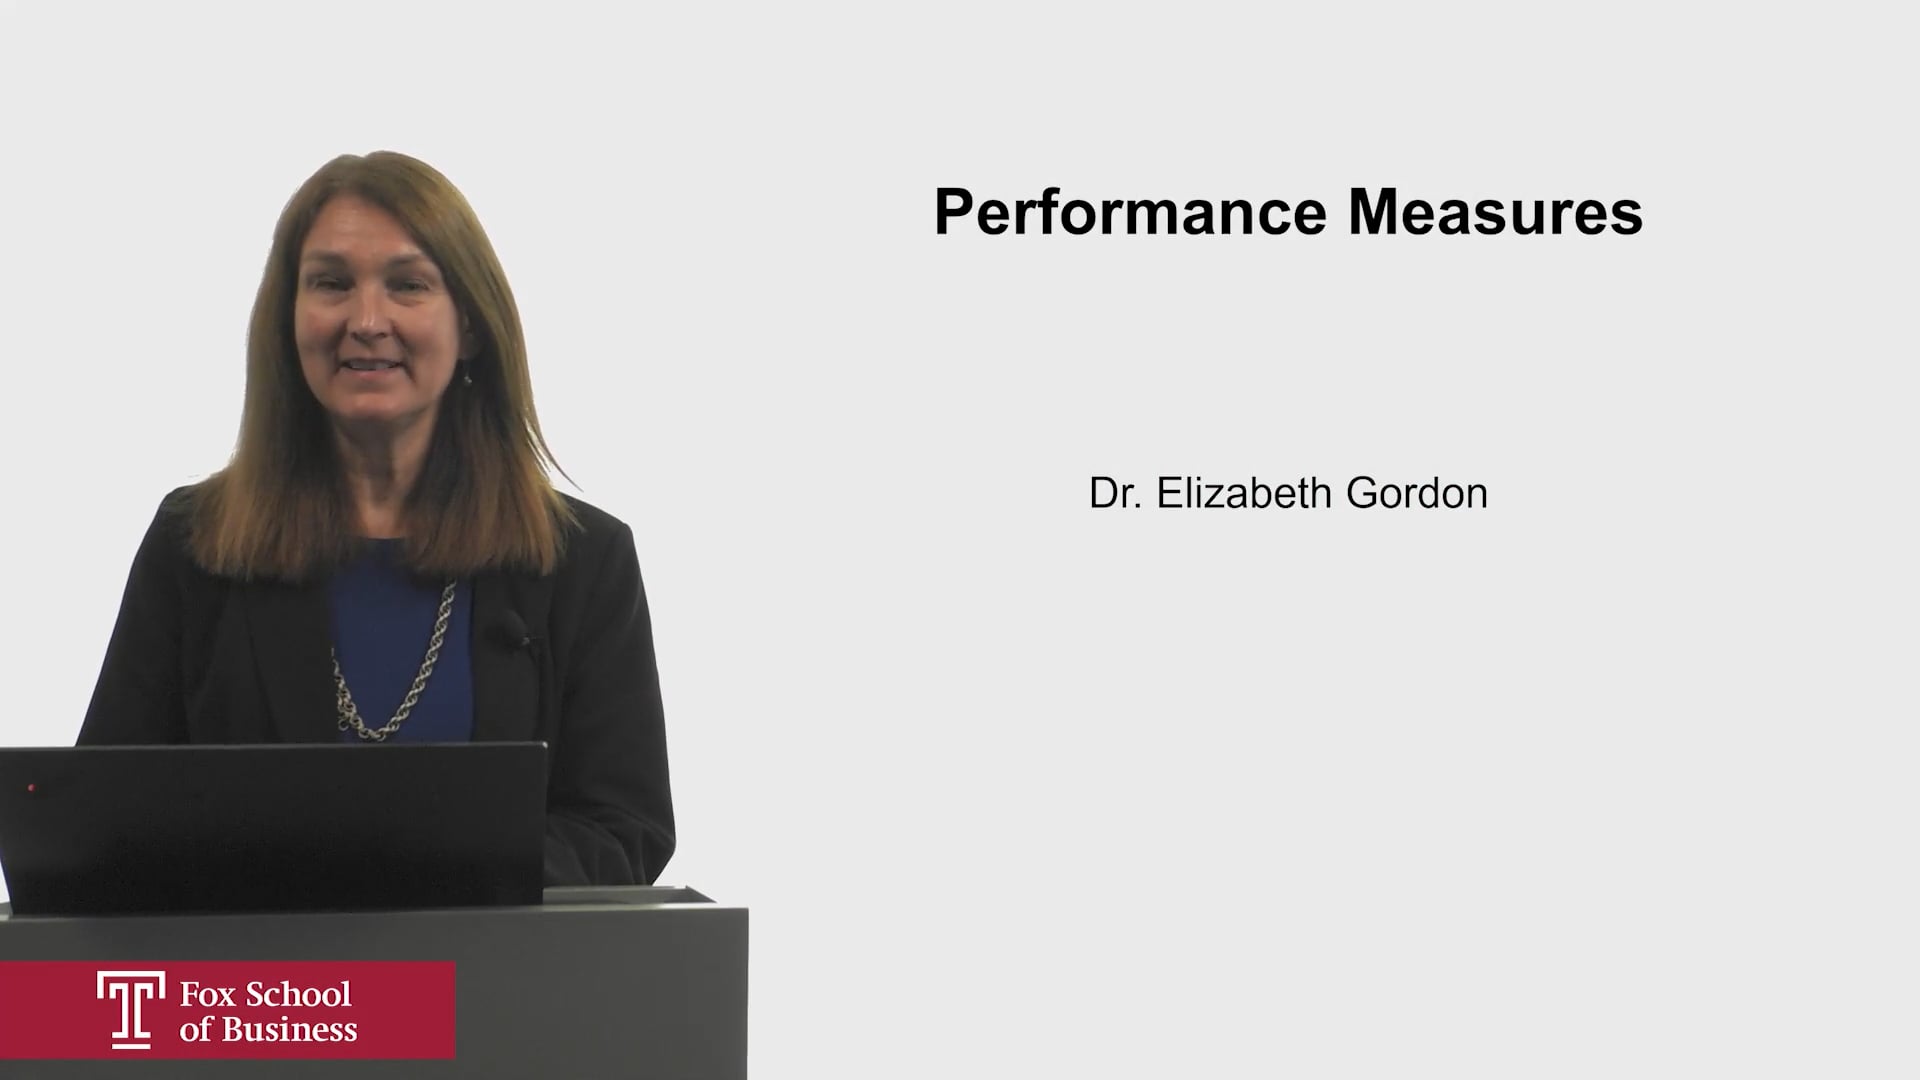 Performance Measures